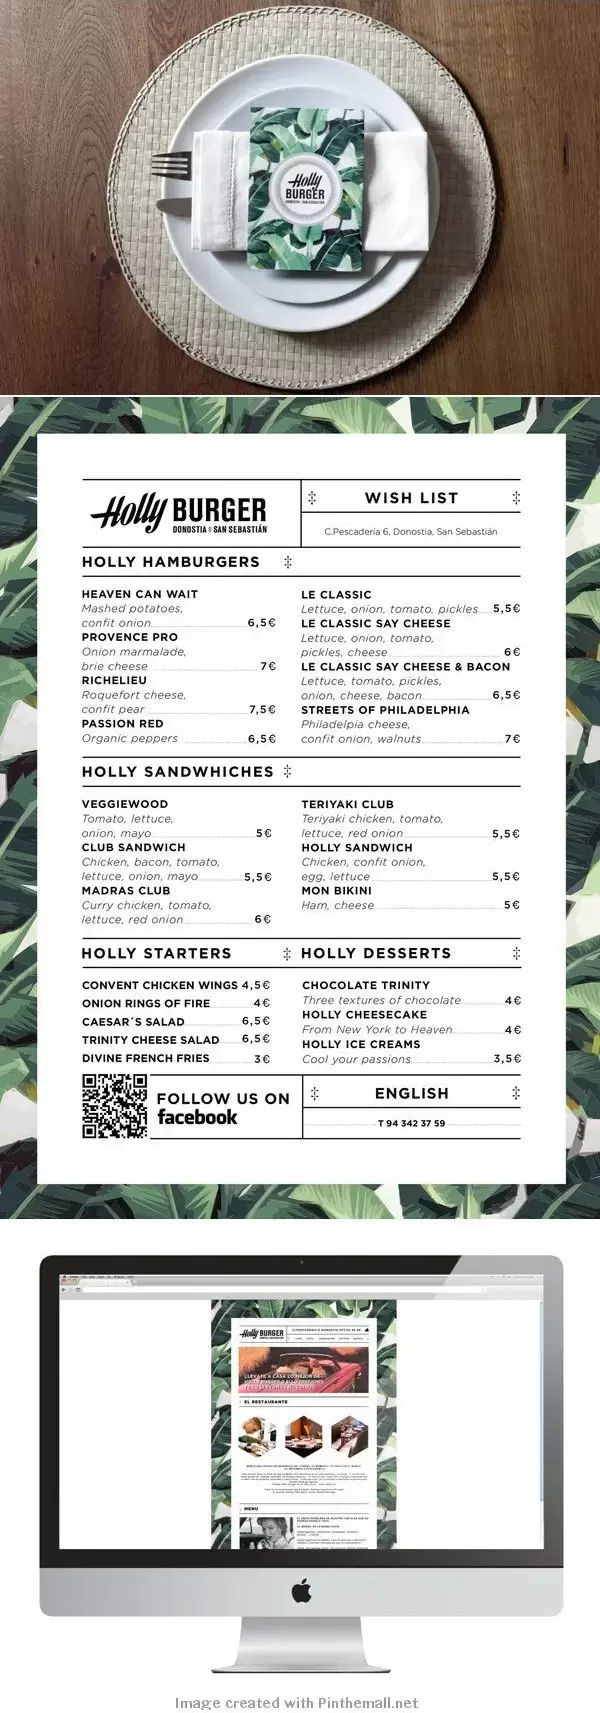 Holly burger partie 2